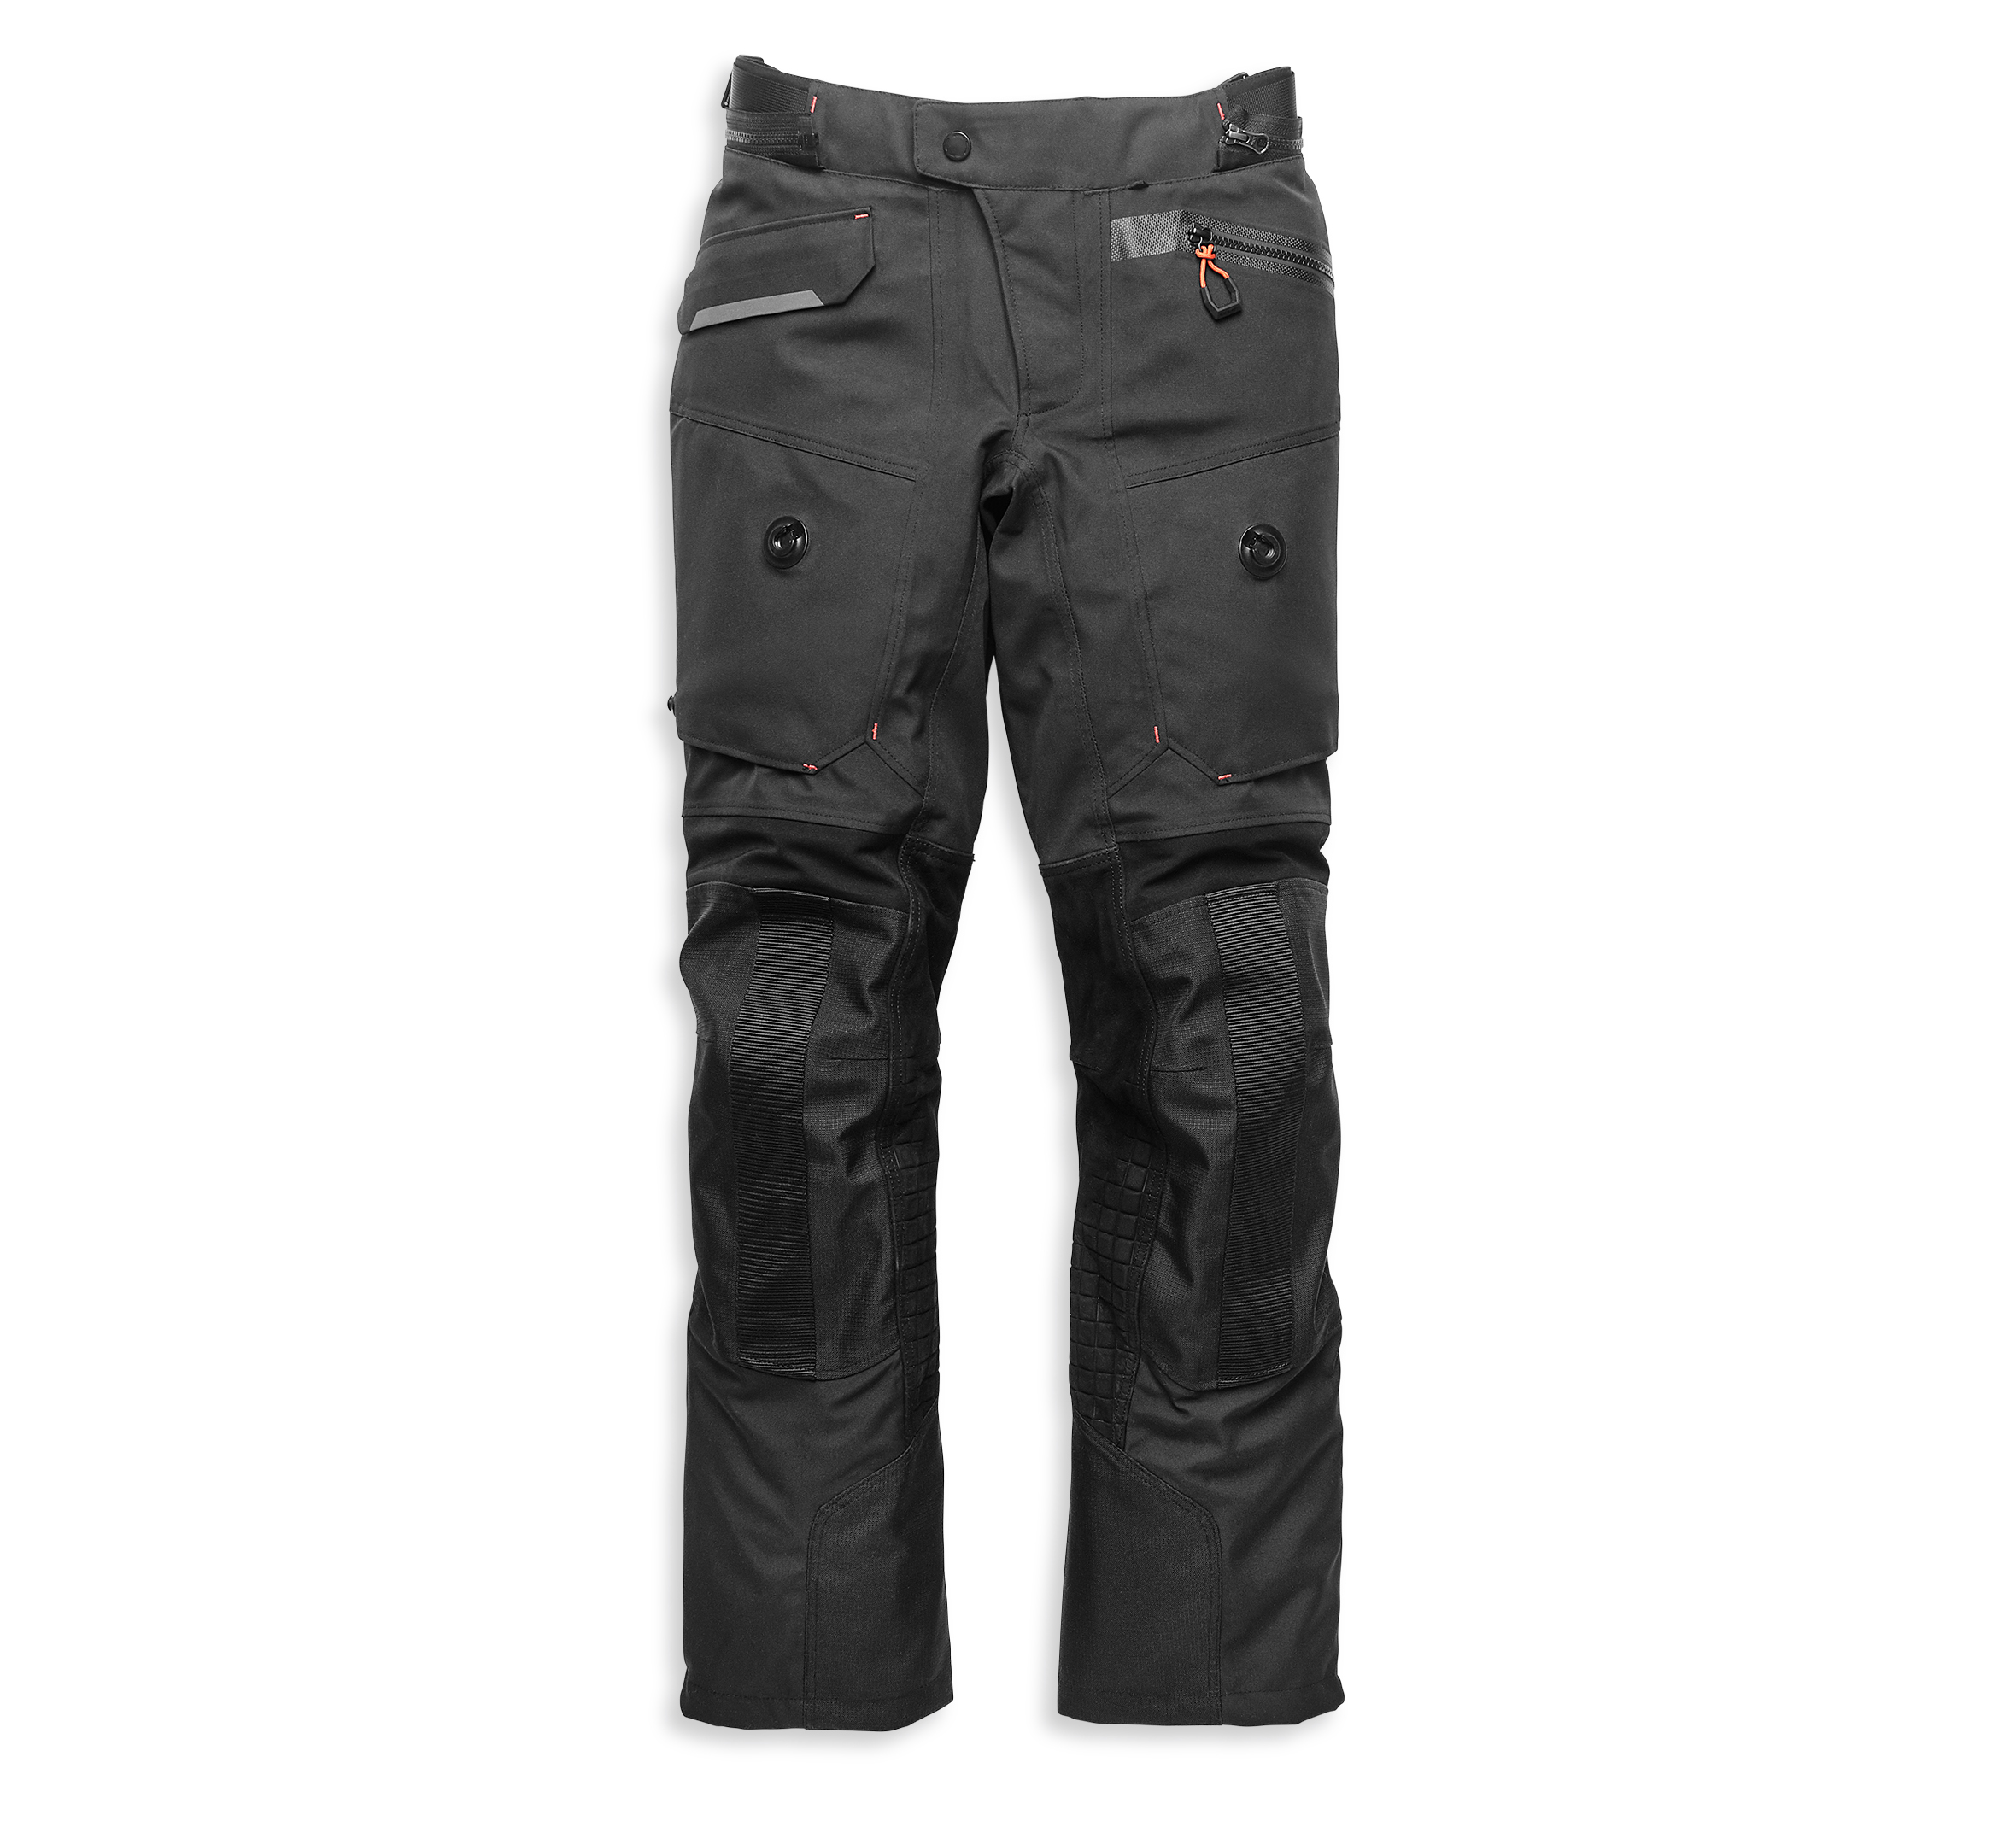 Stylish Harley Davidson Leather Pants - Size 38/10 W